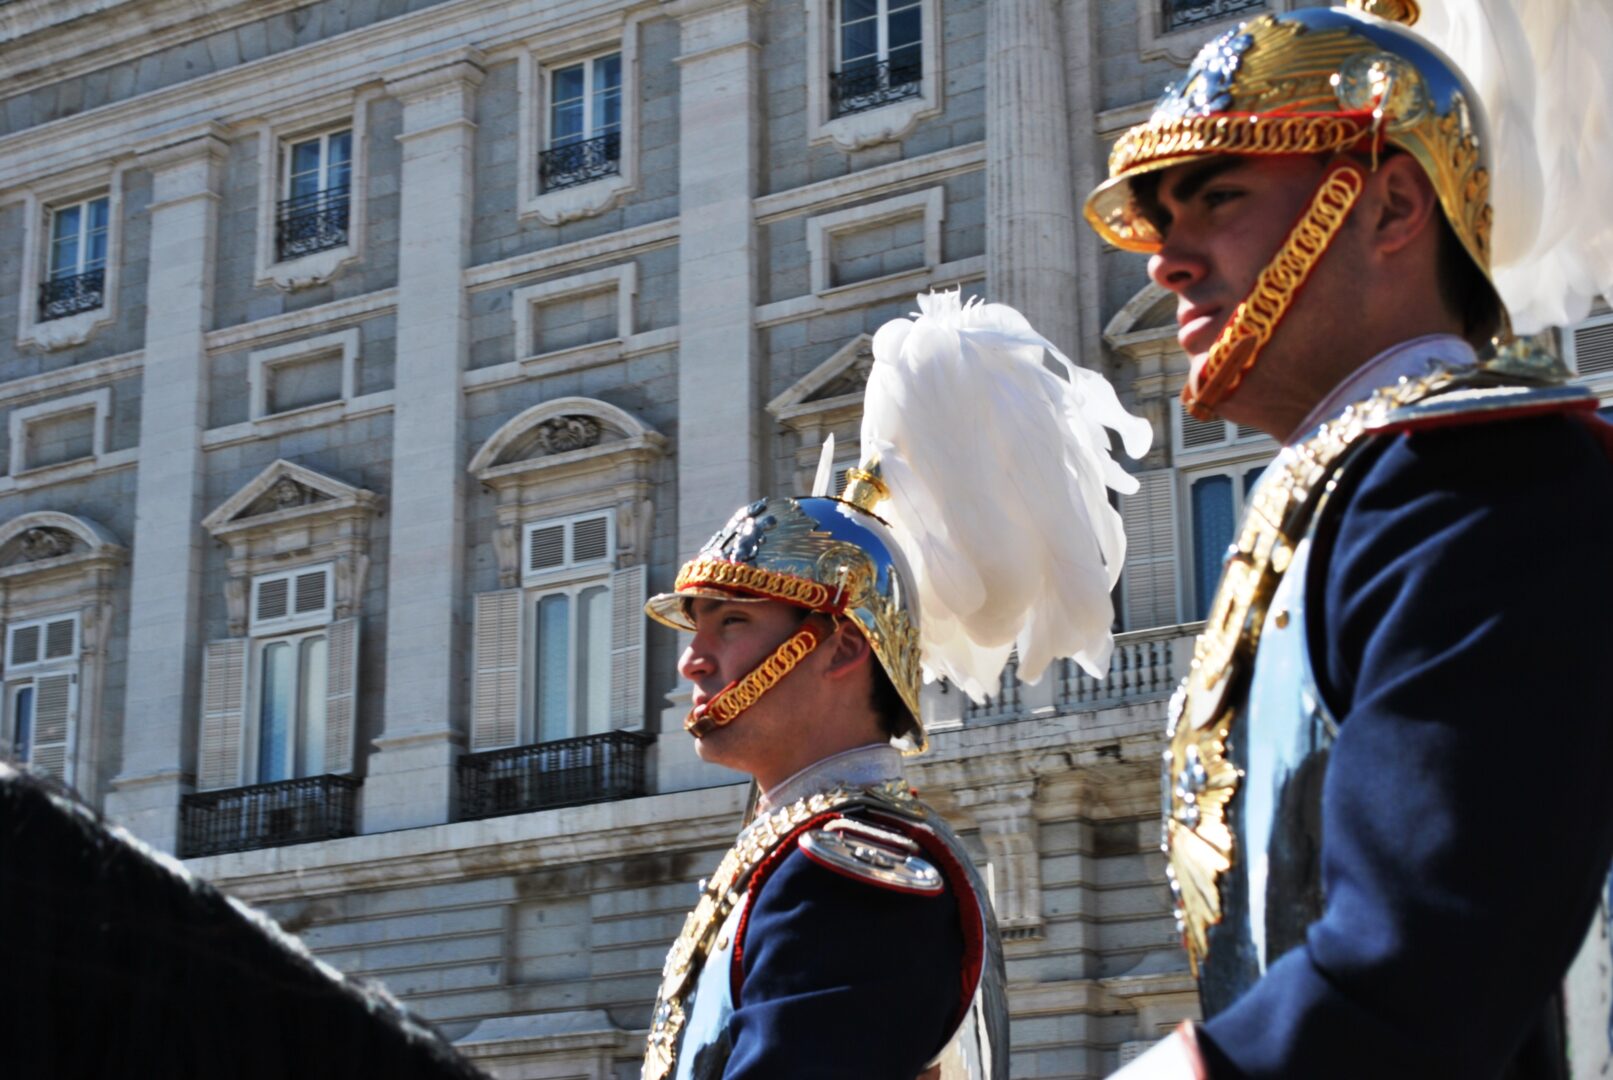 Spanish Royal Guards